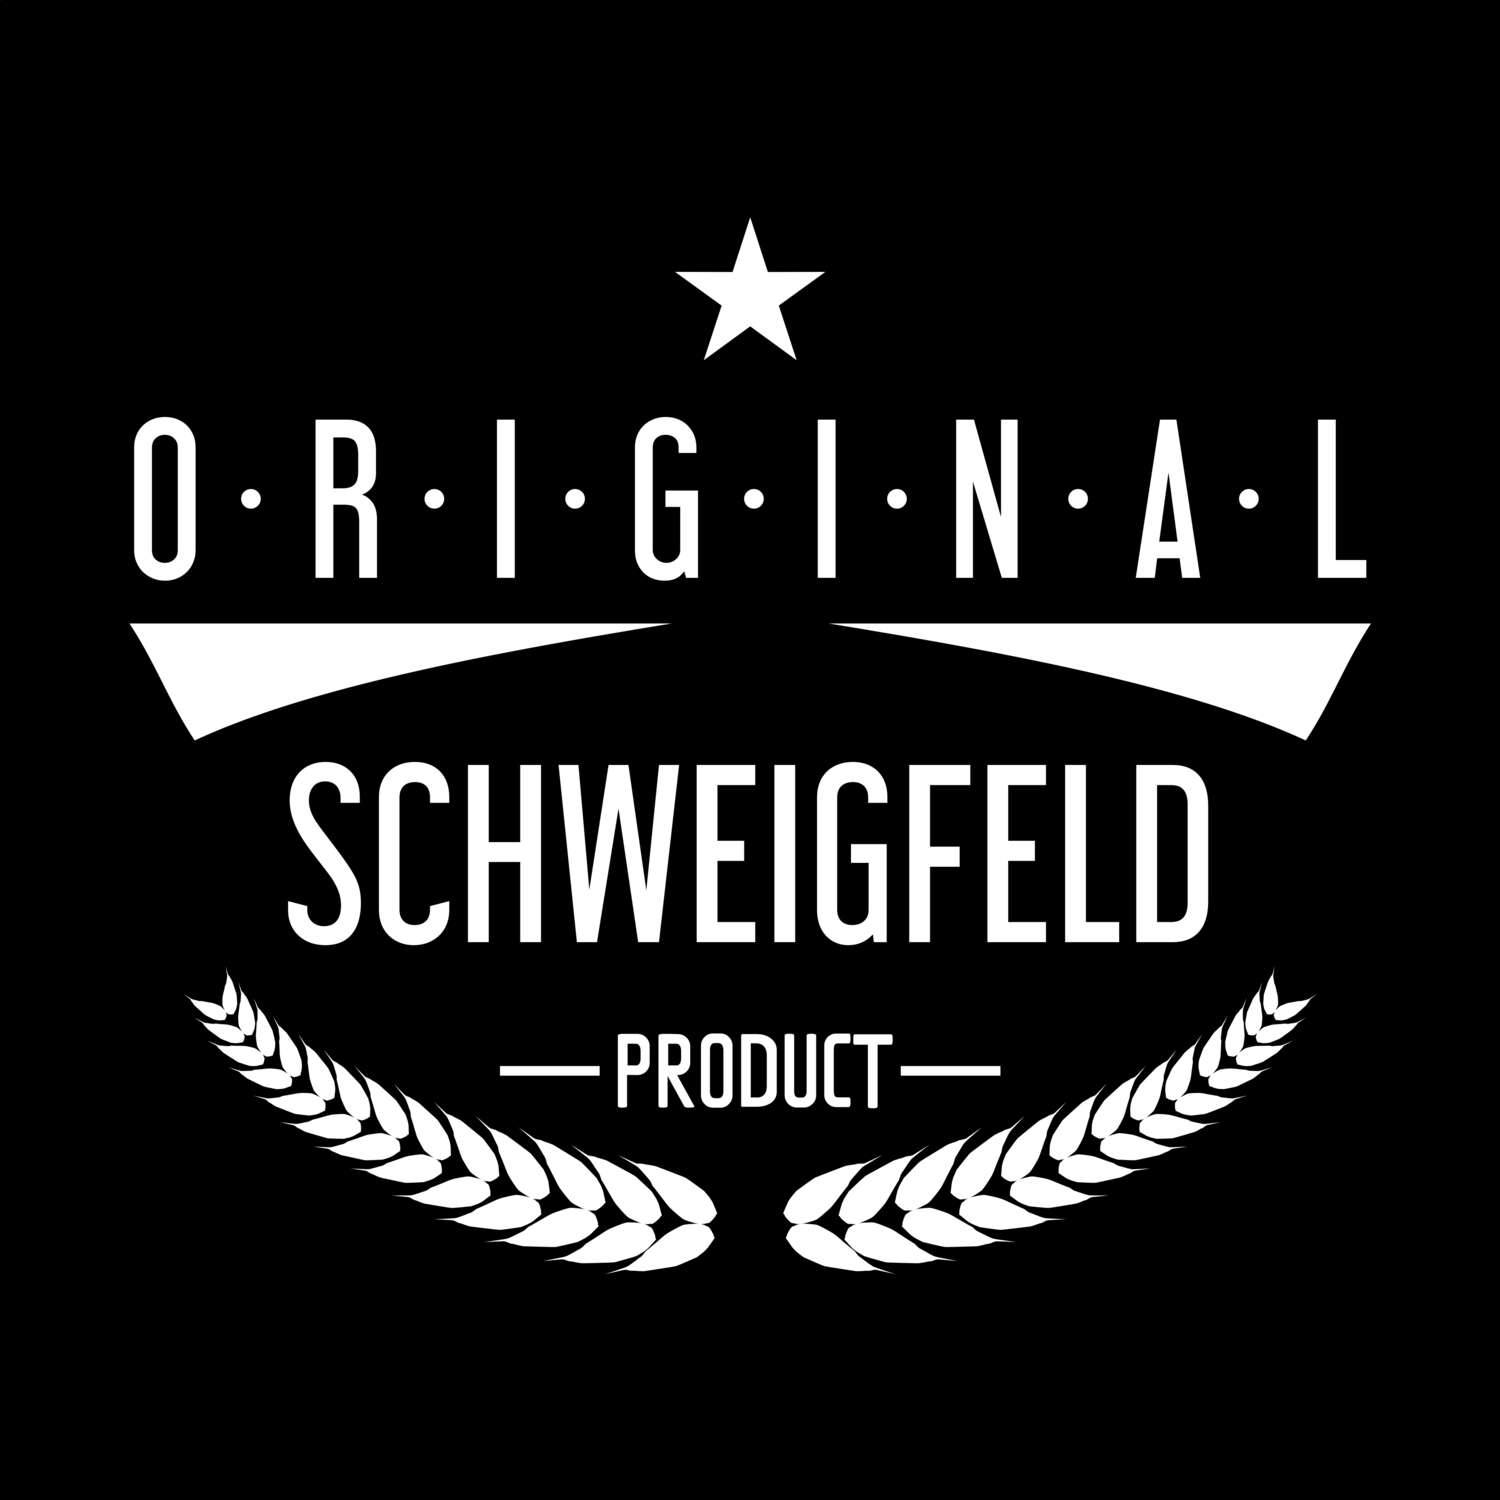 Schweigfeld T-Shirt »Original Product«